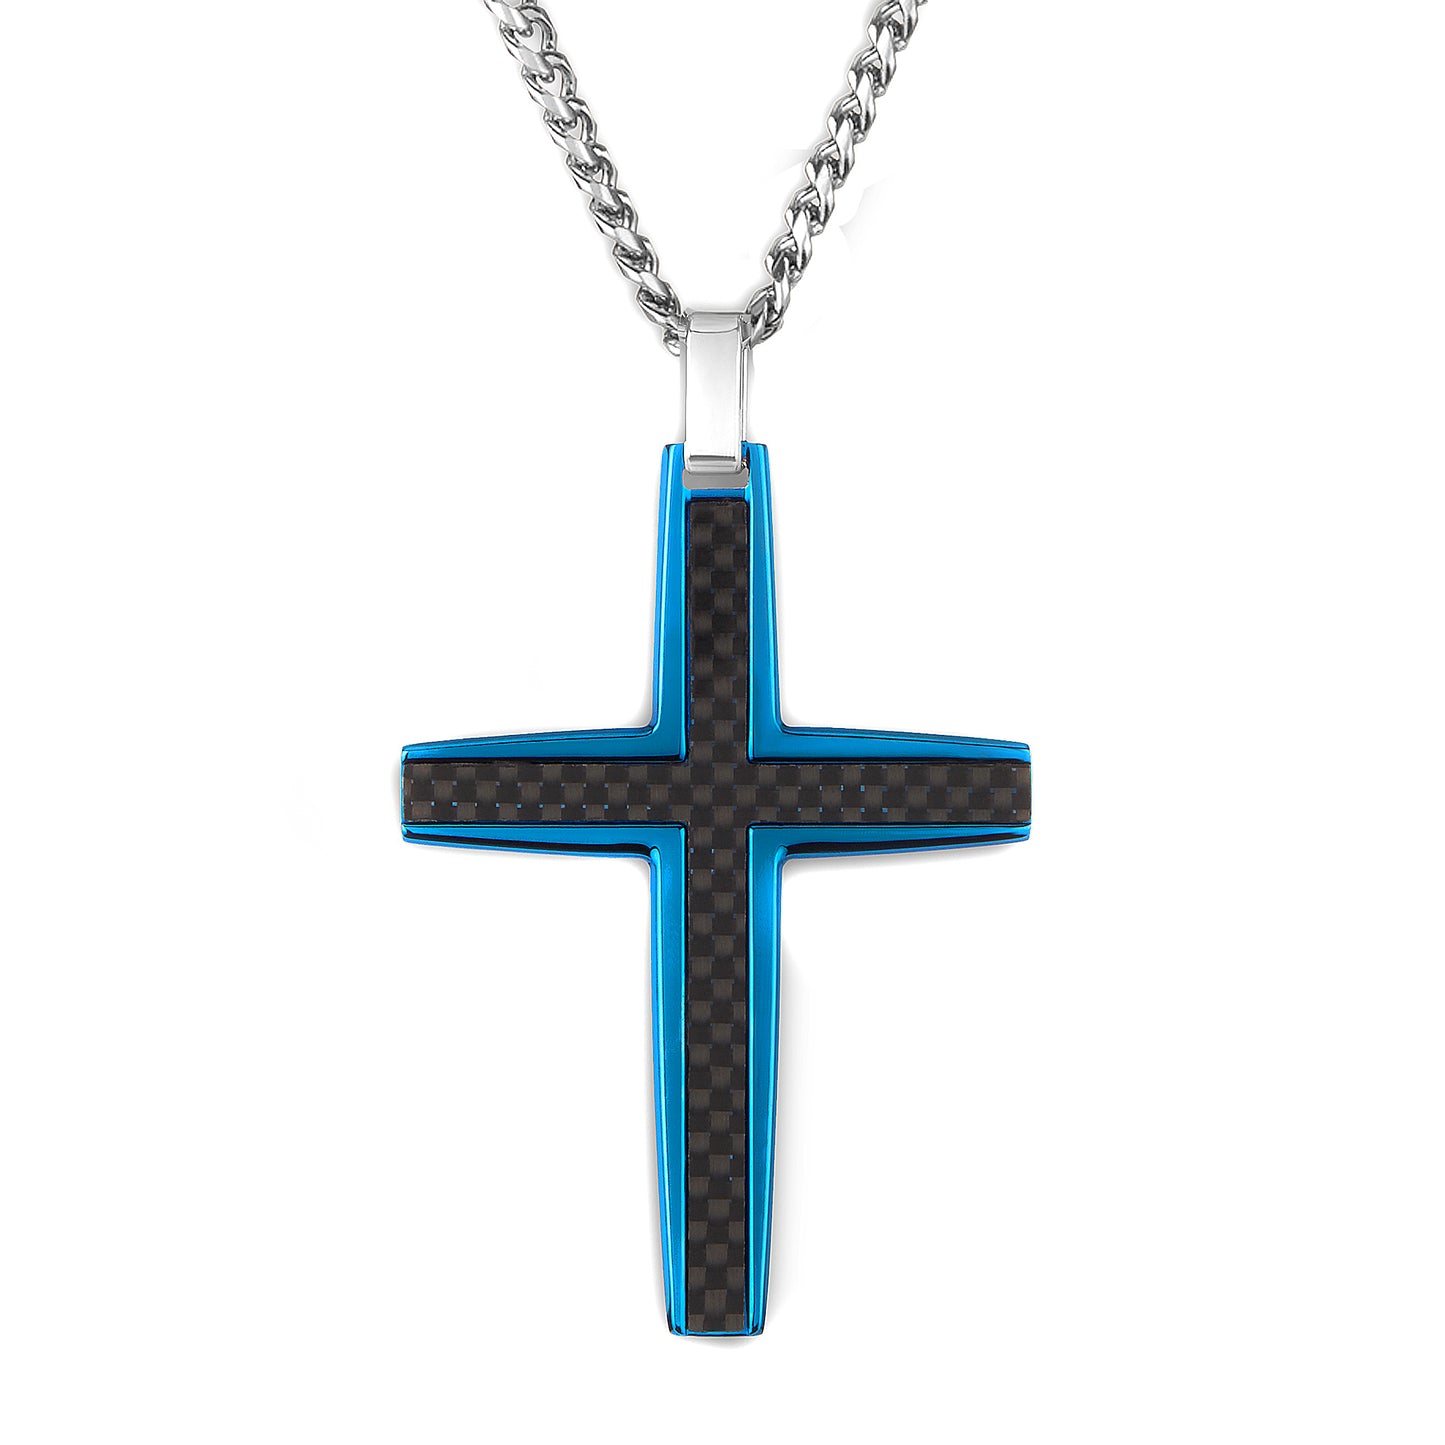 Crucible Los Angeles Black Carbon Fiber Stainless Steel Cross Necklace - Medium